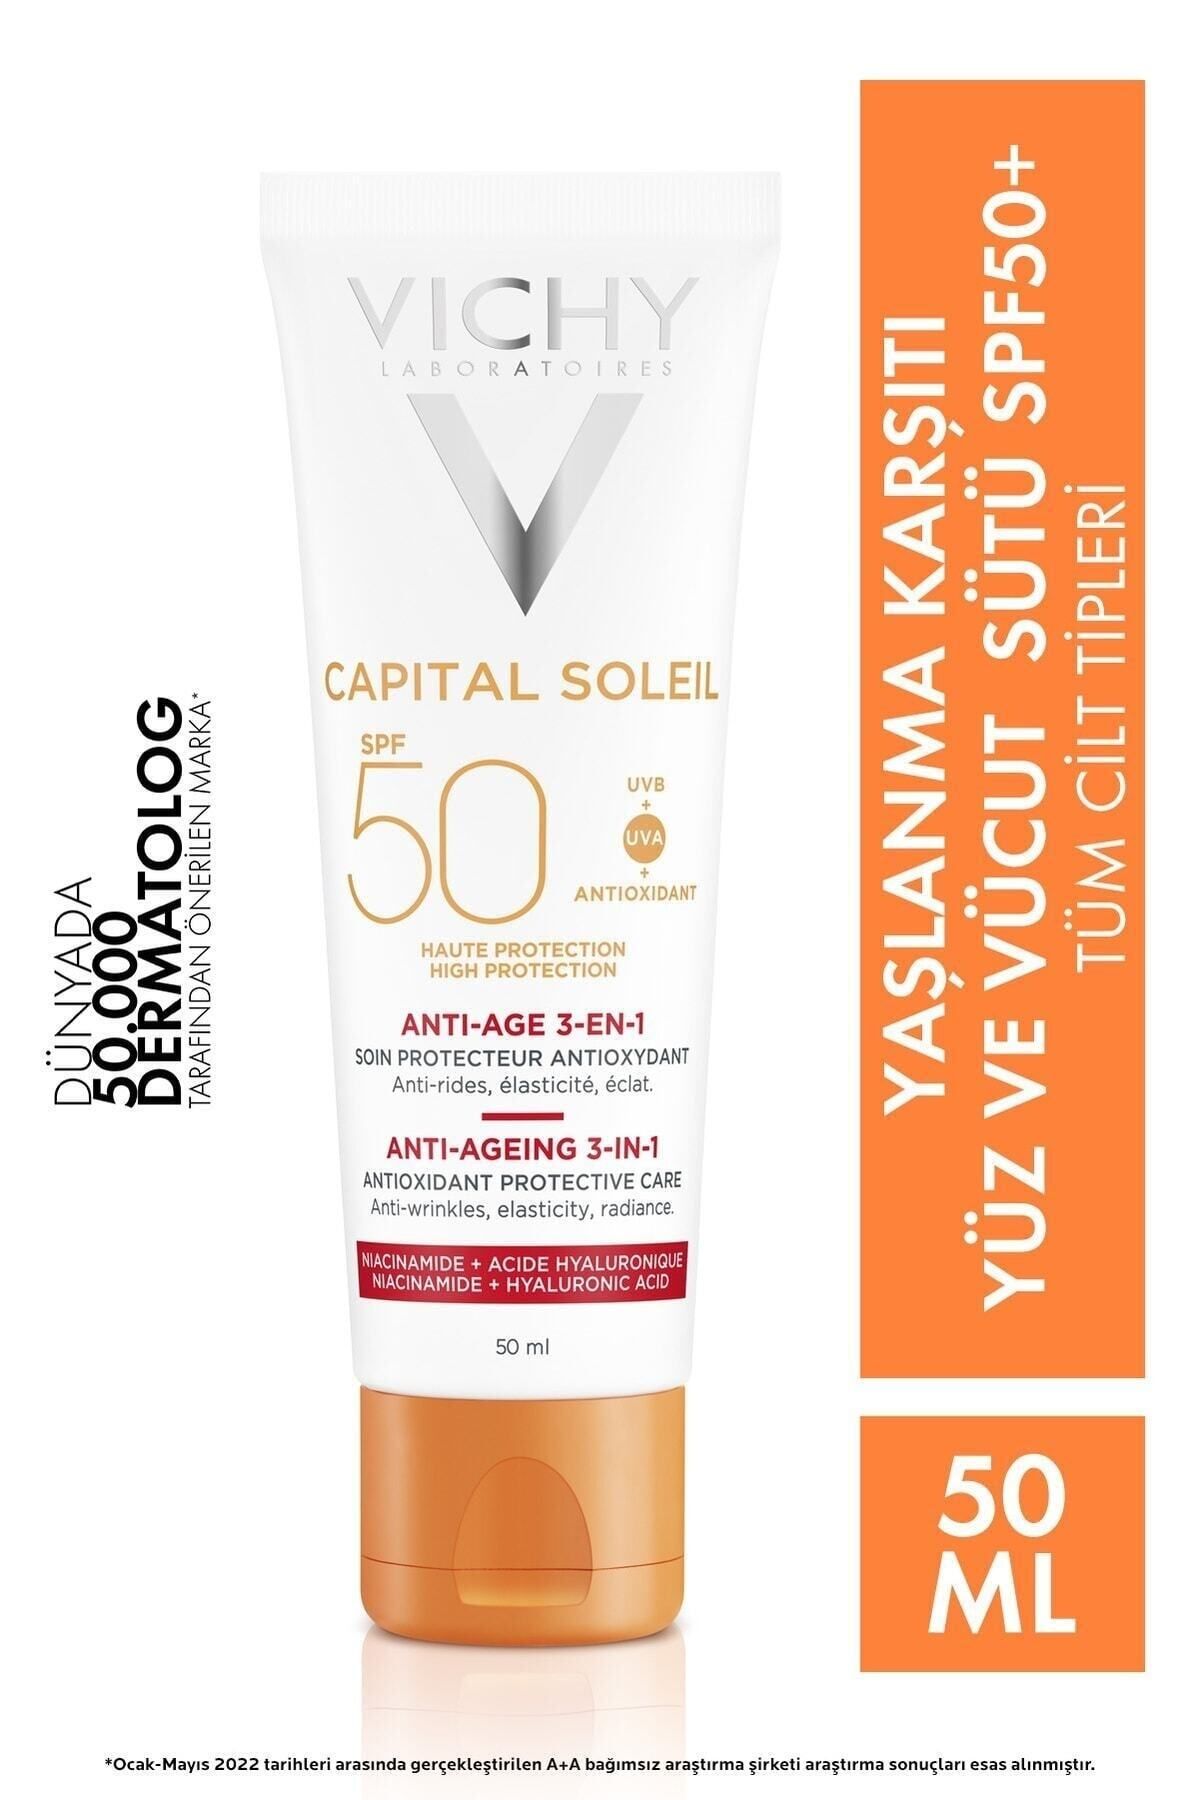 Vichy Capital Soleil High Protection 3 in 1 Anti-Aging Facial Sunscreen Spf 50+ 50 ml DKÜRÜN1517